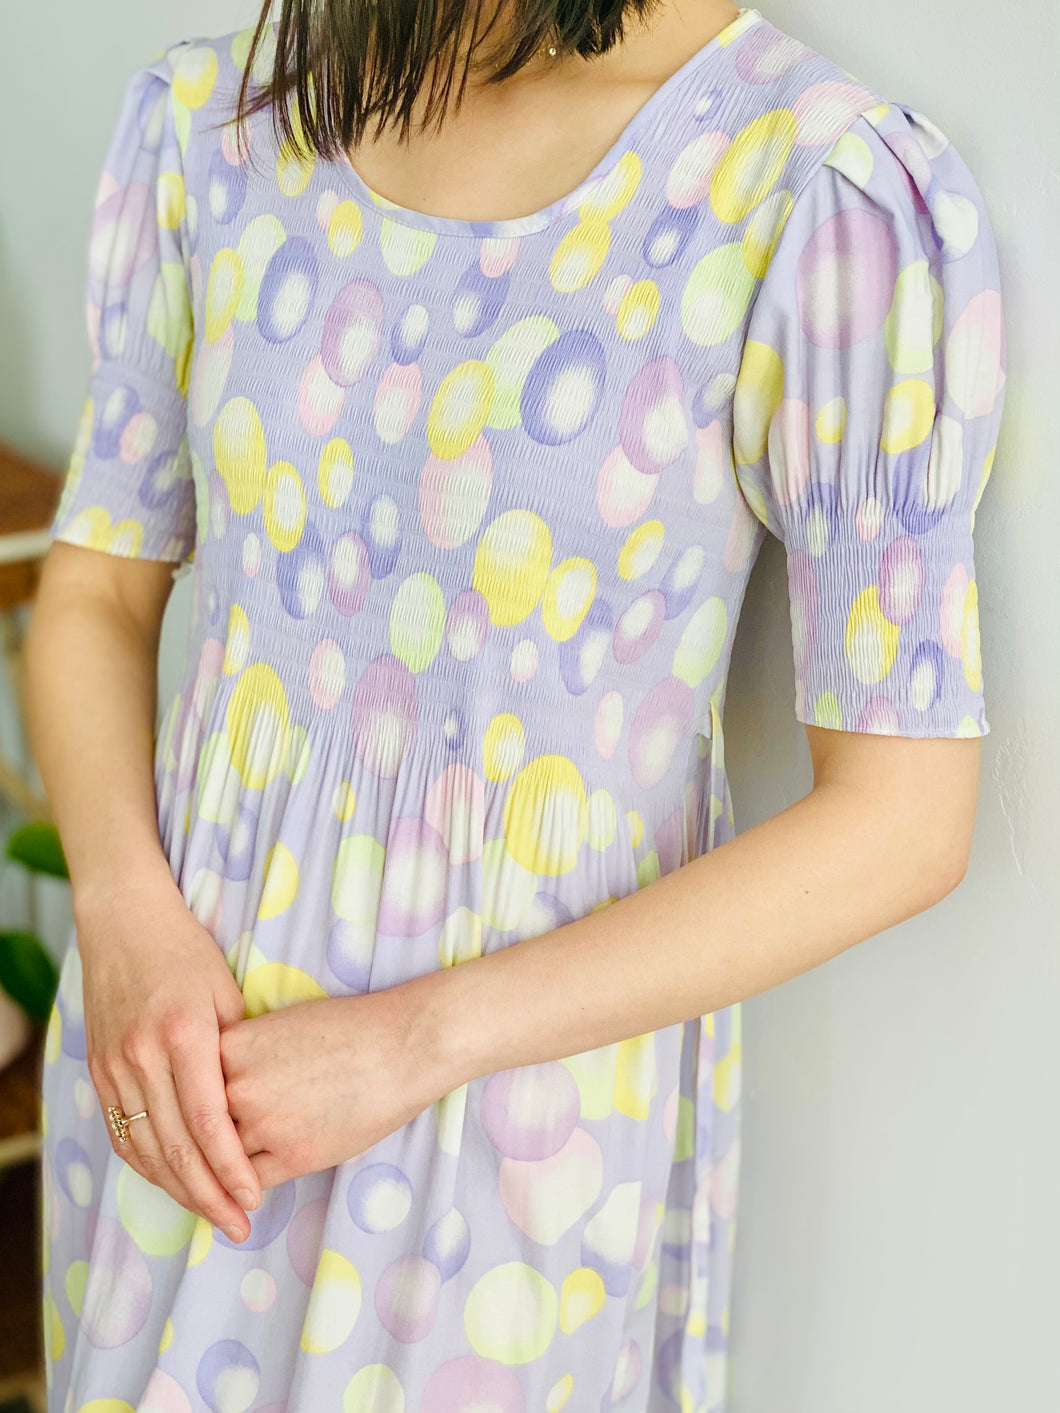 Vintage Pastel Lavender Color Novelty Print Dress w Puff Sleeves